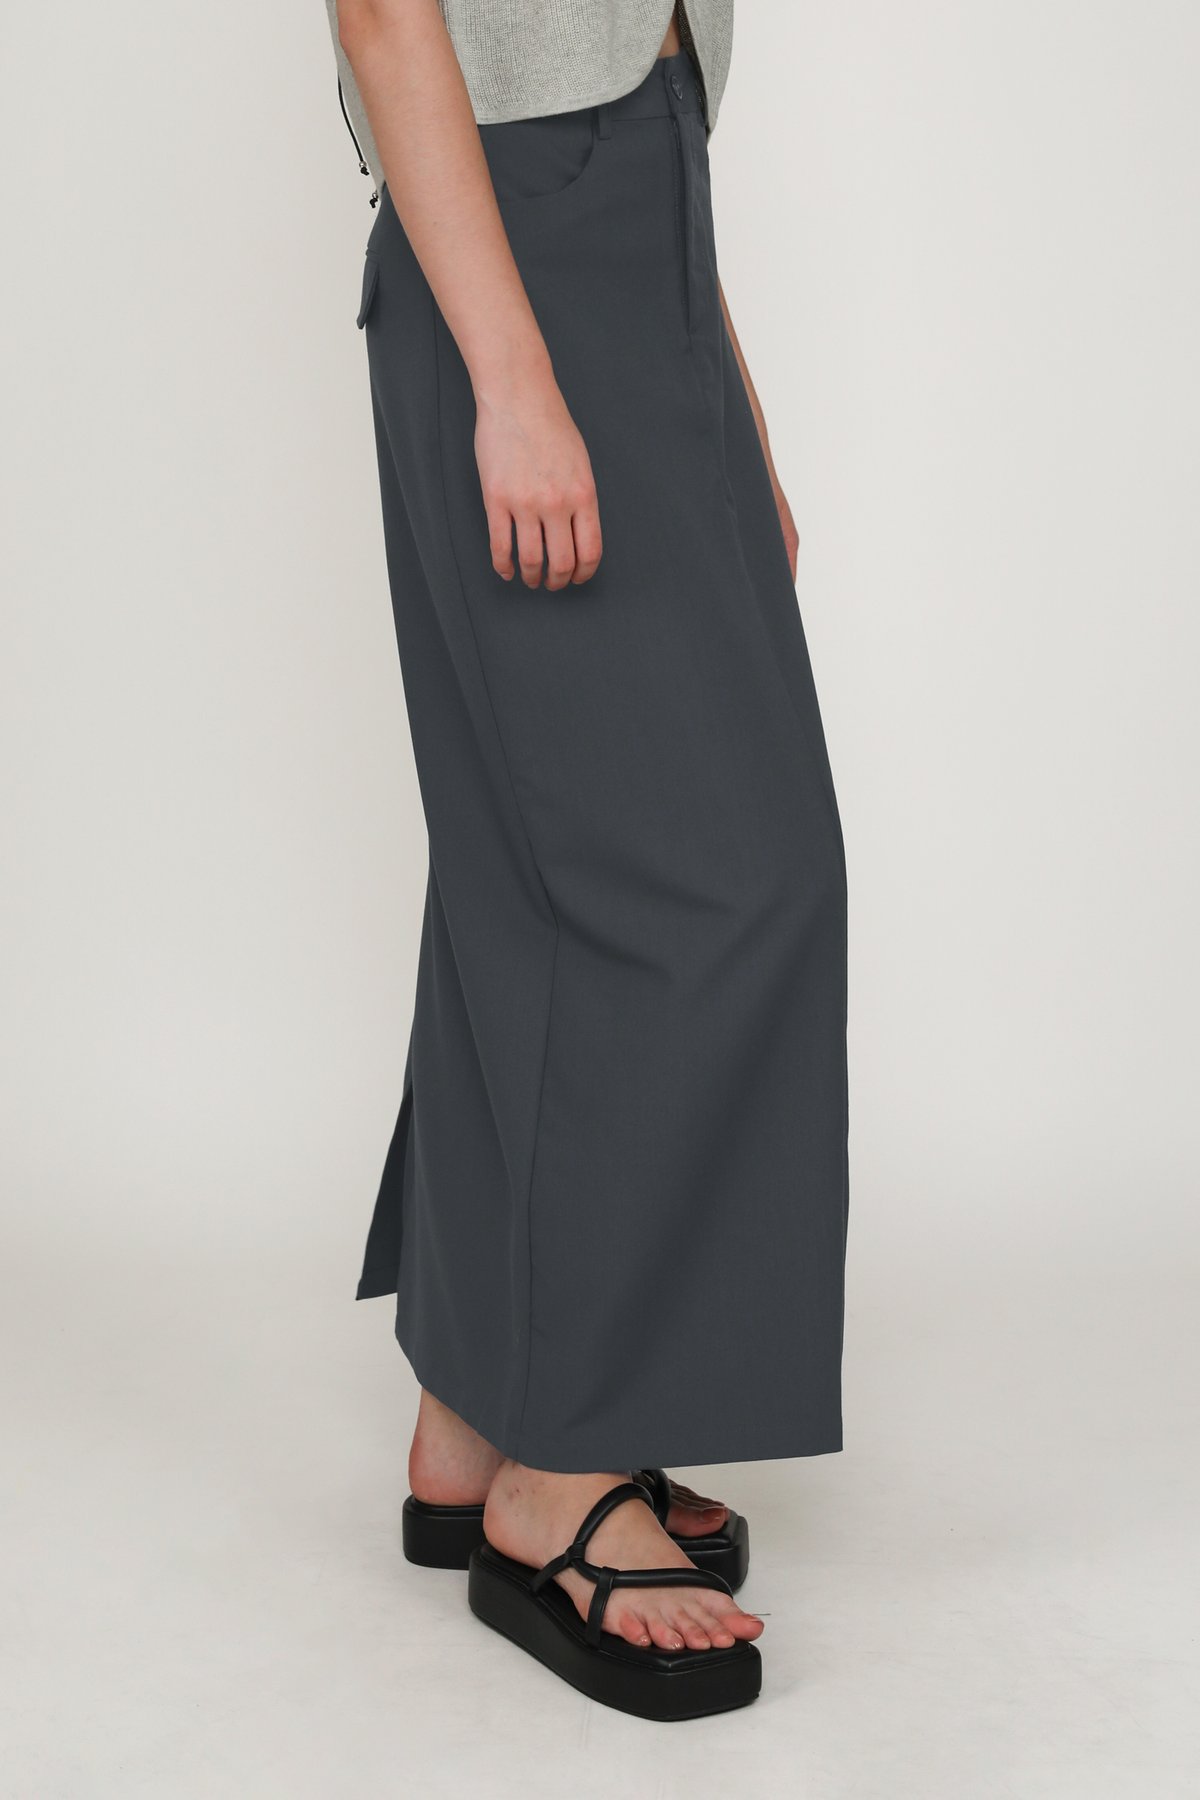 Flyn Tailored Maxi Skirt (Gunmetal Grey)